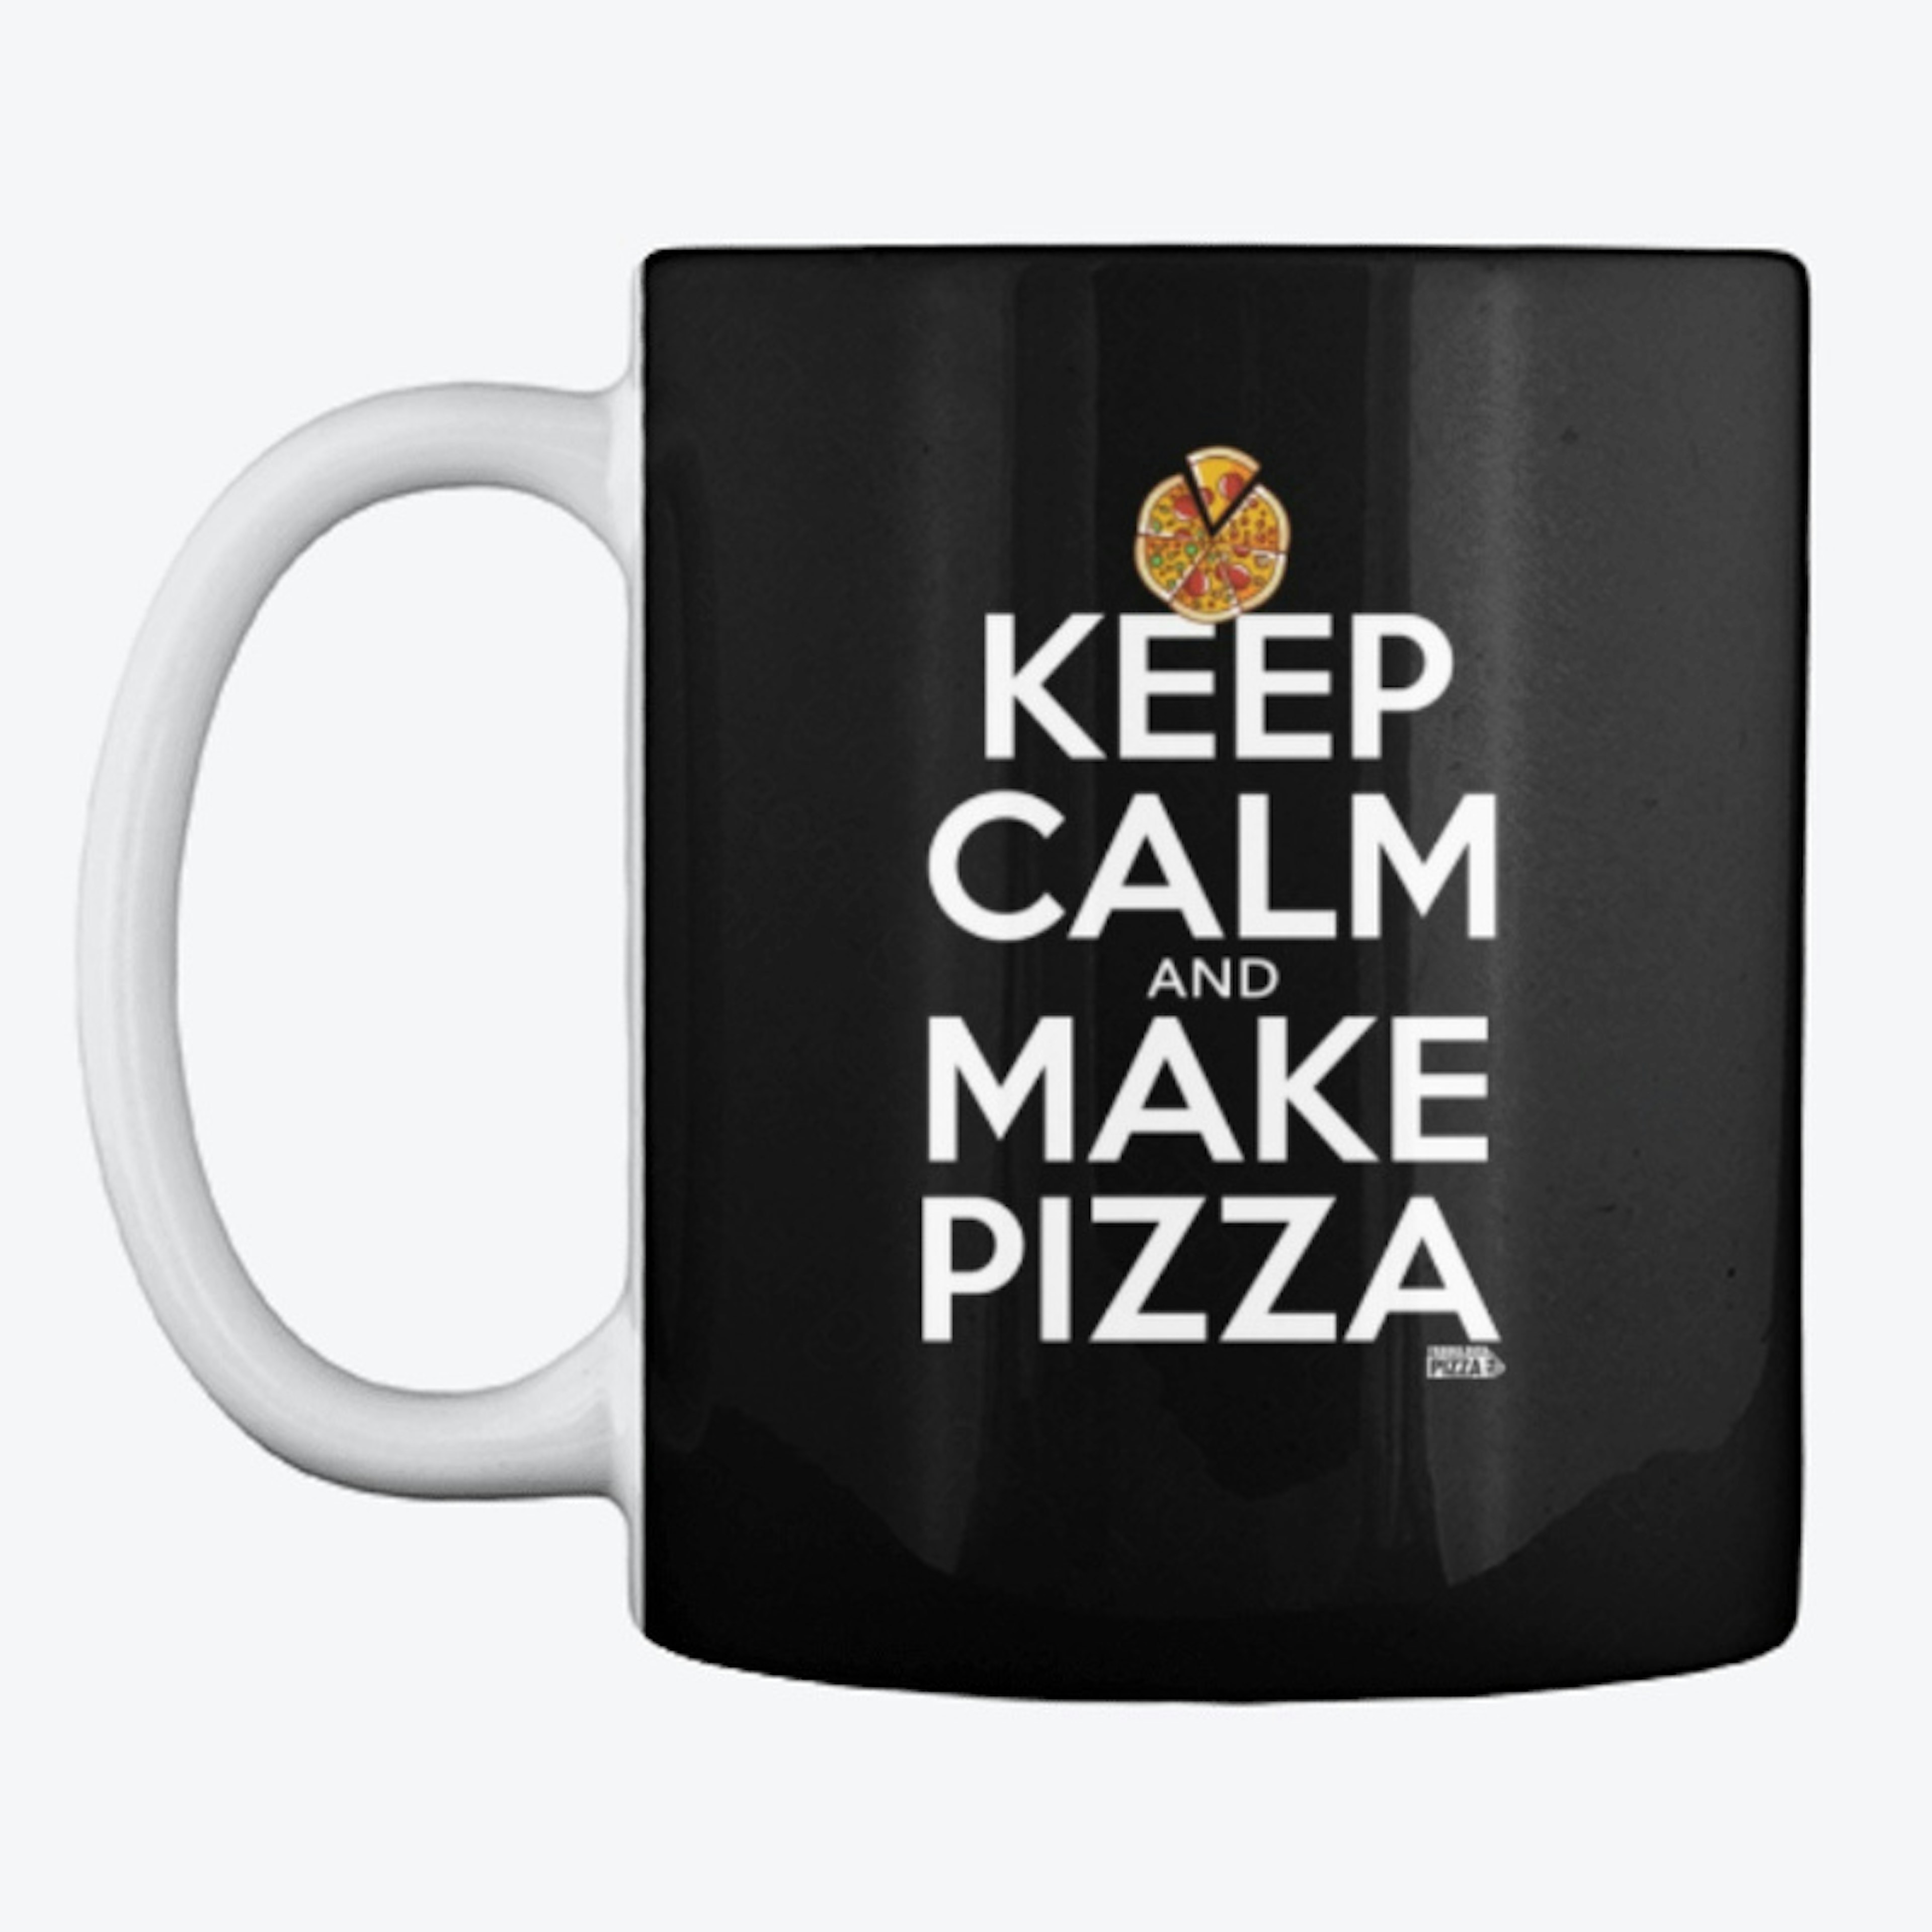 Keep calm and make pizza